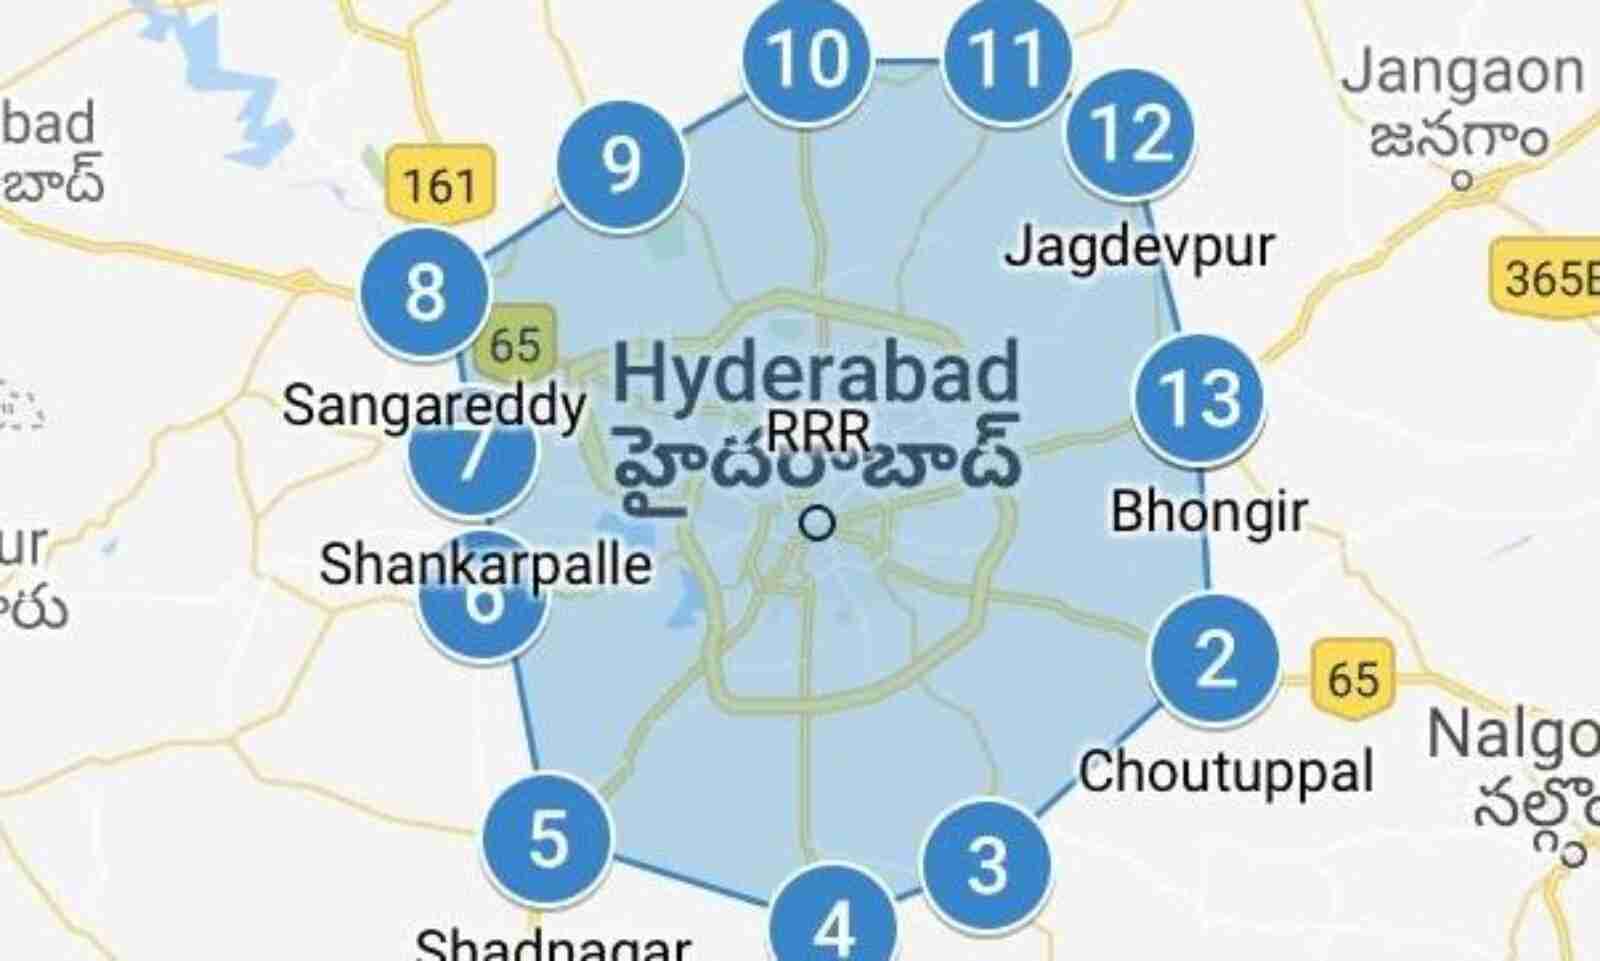 Hyderabad Airport metro express seems unnecessary. | by Srikanth  Peddibhotla | Medium